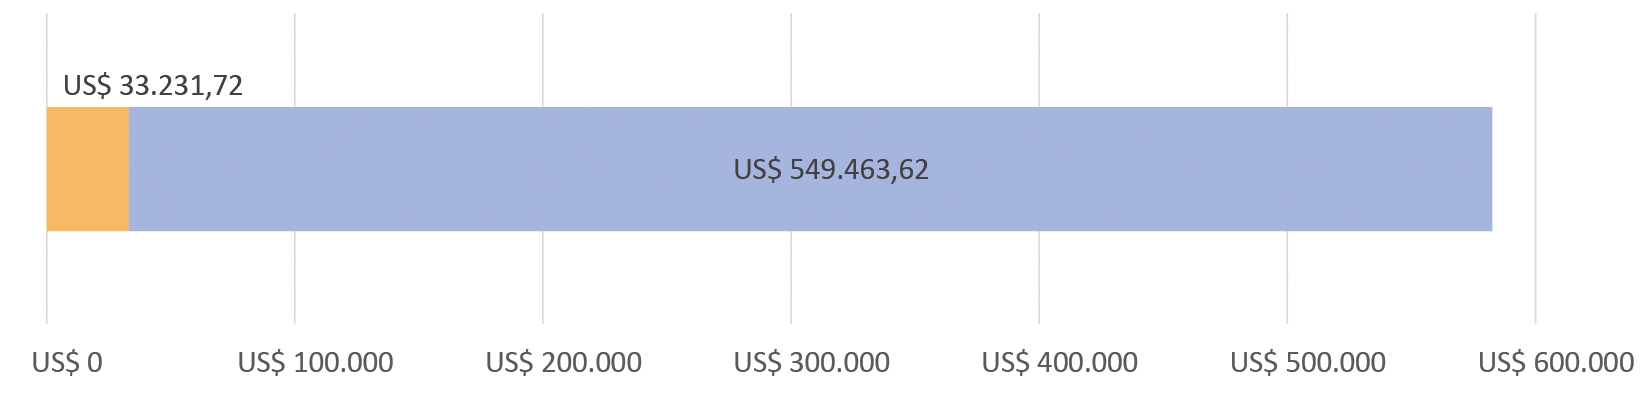 US$33.231,72 gastos; US$549.463,62 restantes